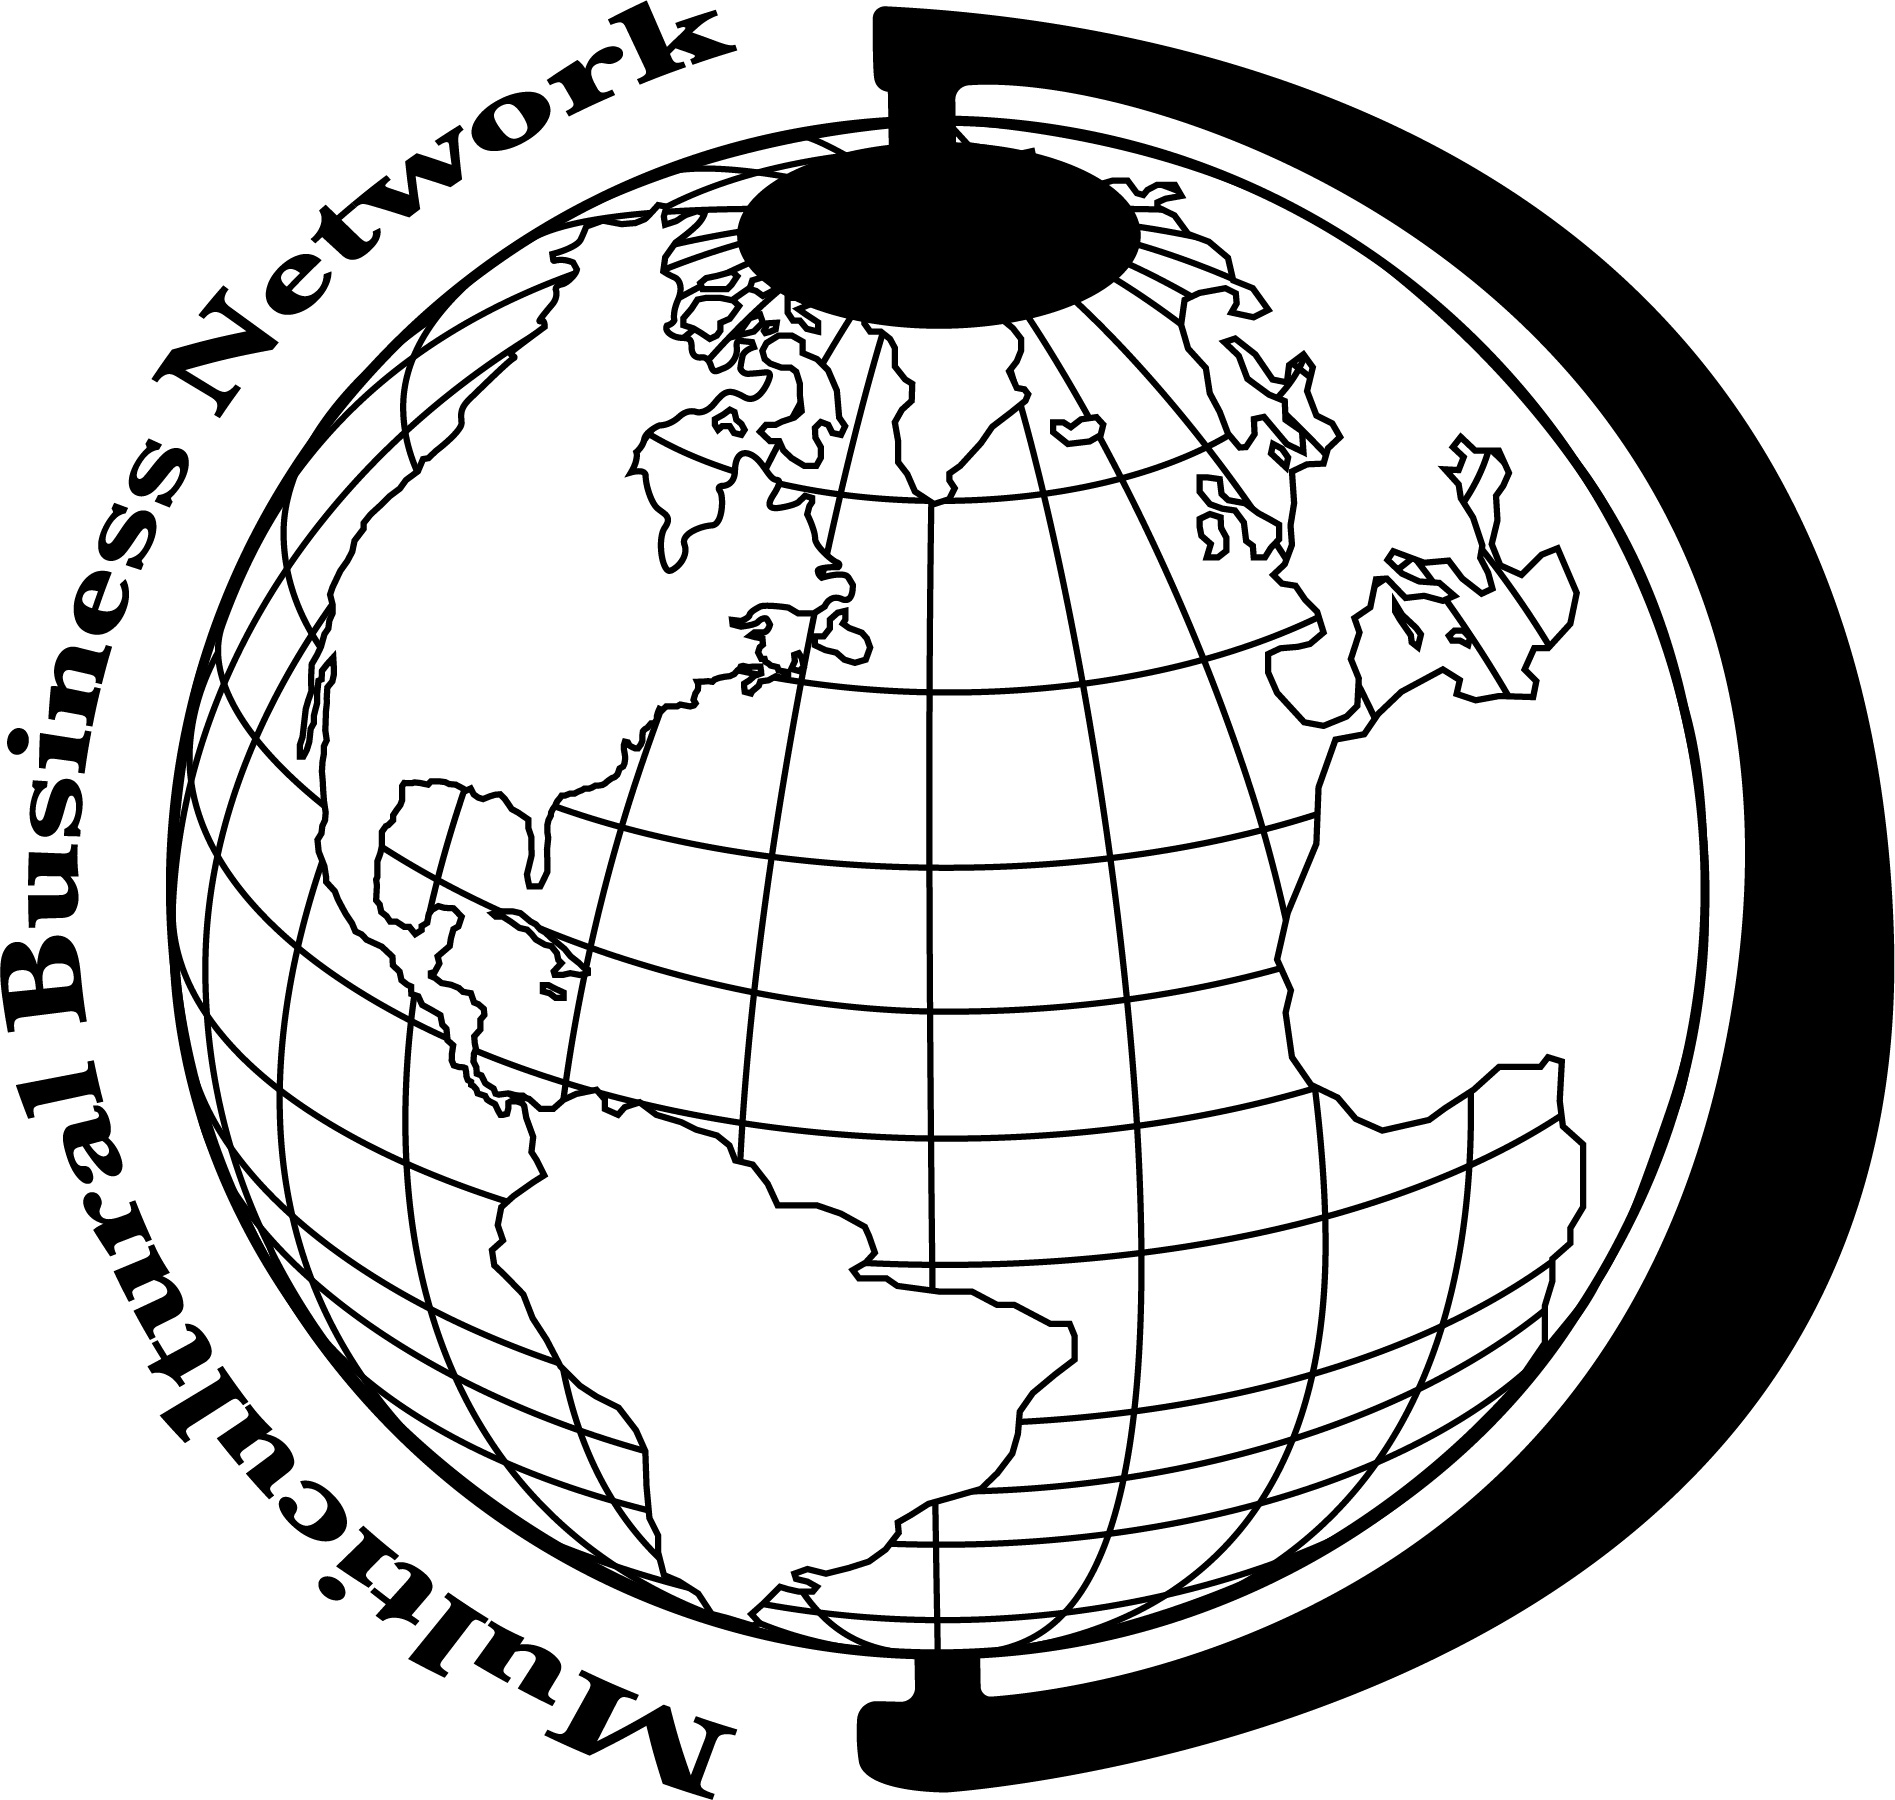 Multicultural Business Network Header